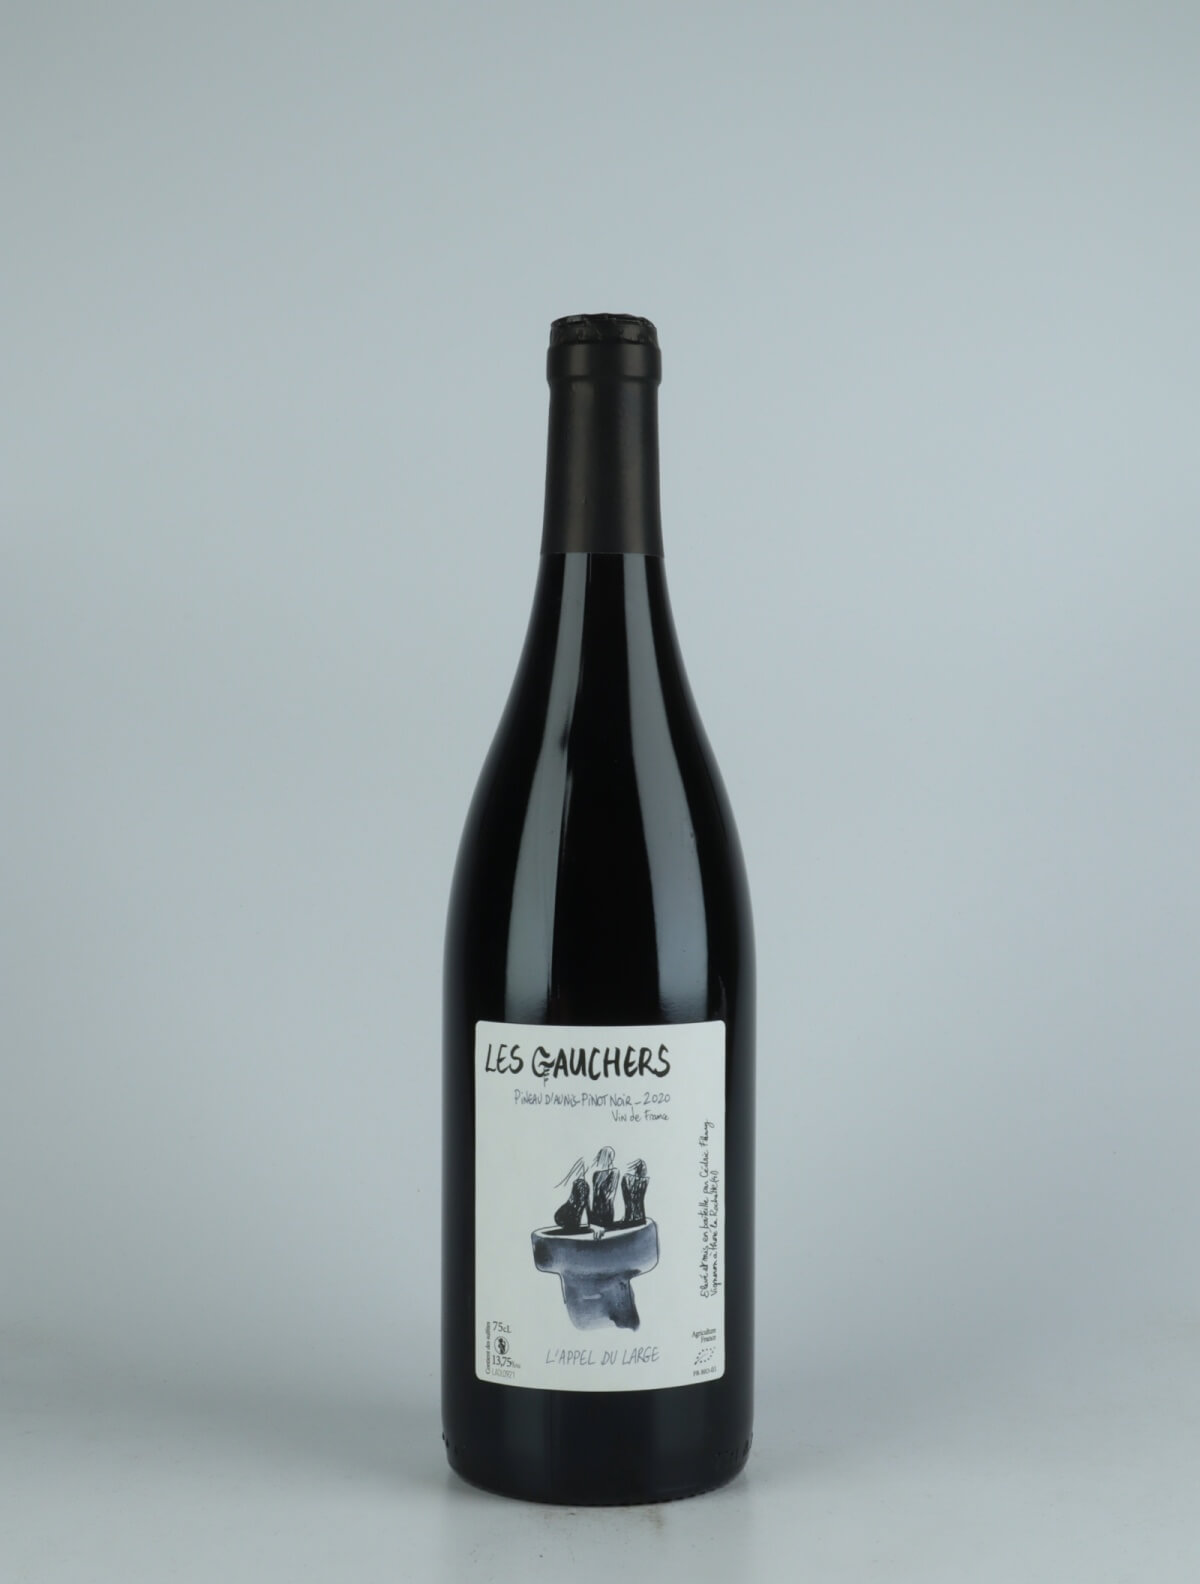 A bottle 2020 L'Appel du Large Red wine from Les Gauchers, Loire in France